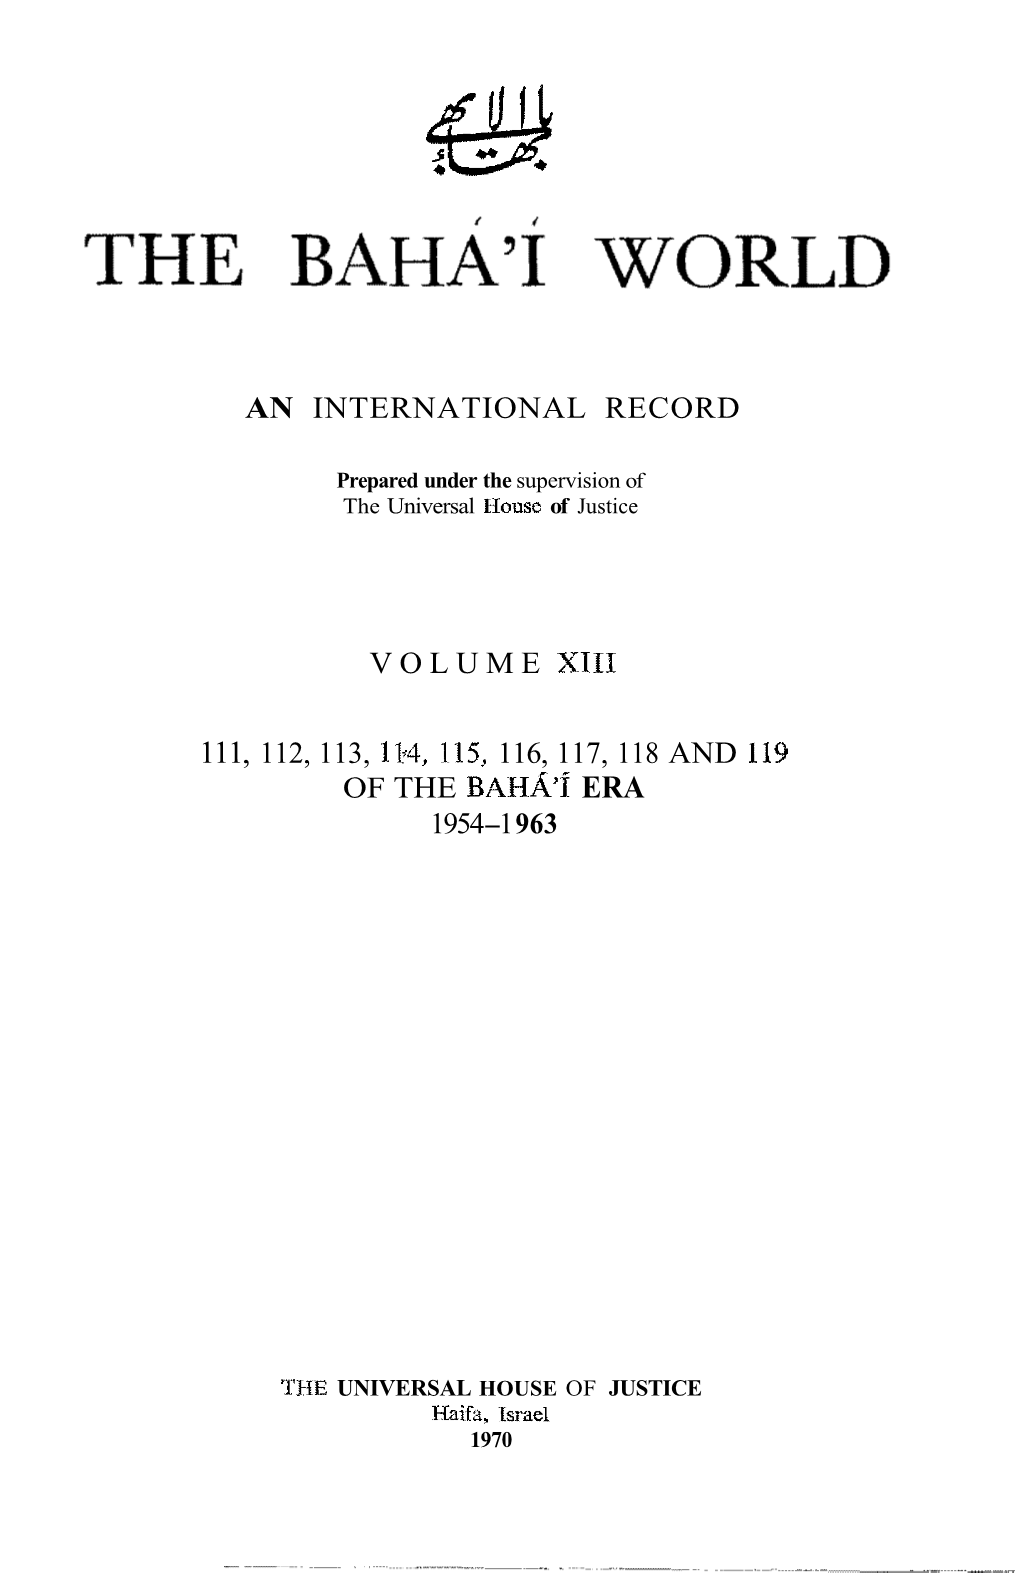 An International Record Volume Xi14 111, 112, 113, 1$4